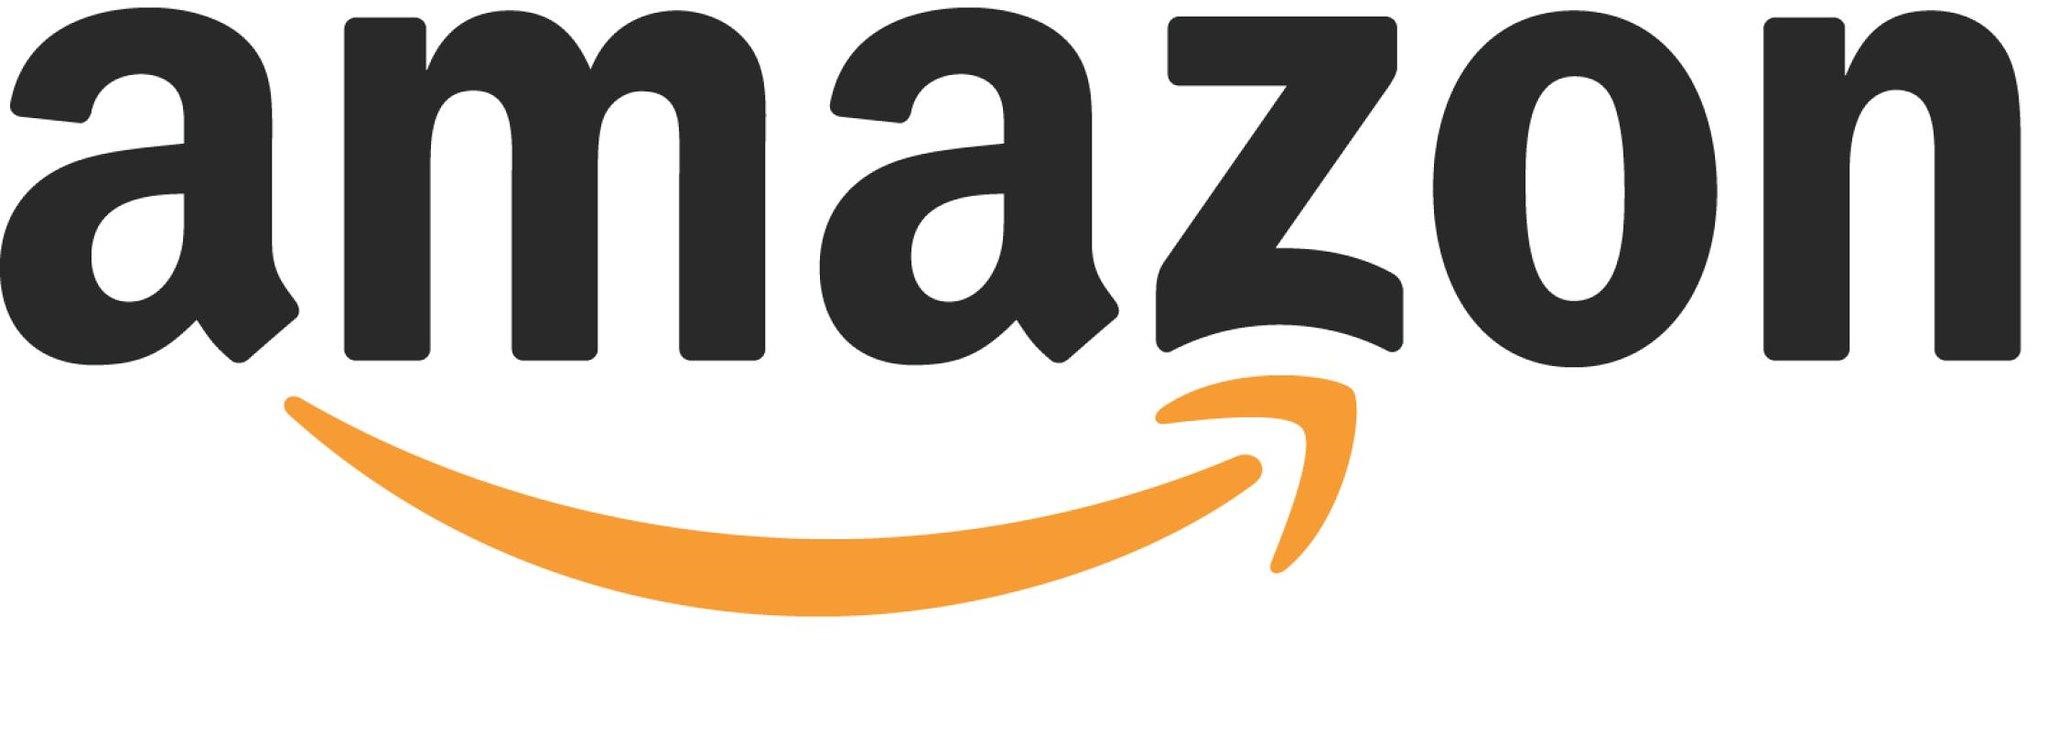 Scraping Amazon Best Sellers Rankings Data using BotScraper